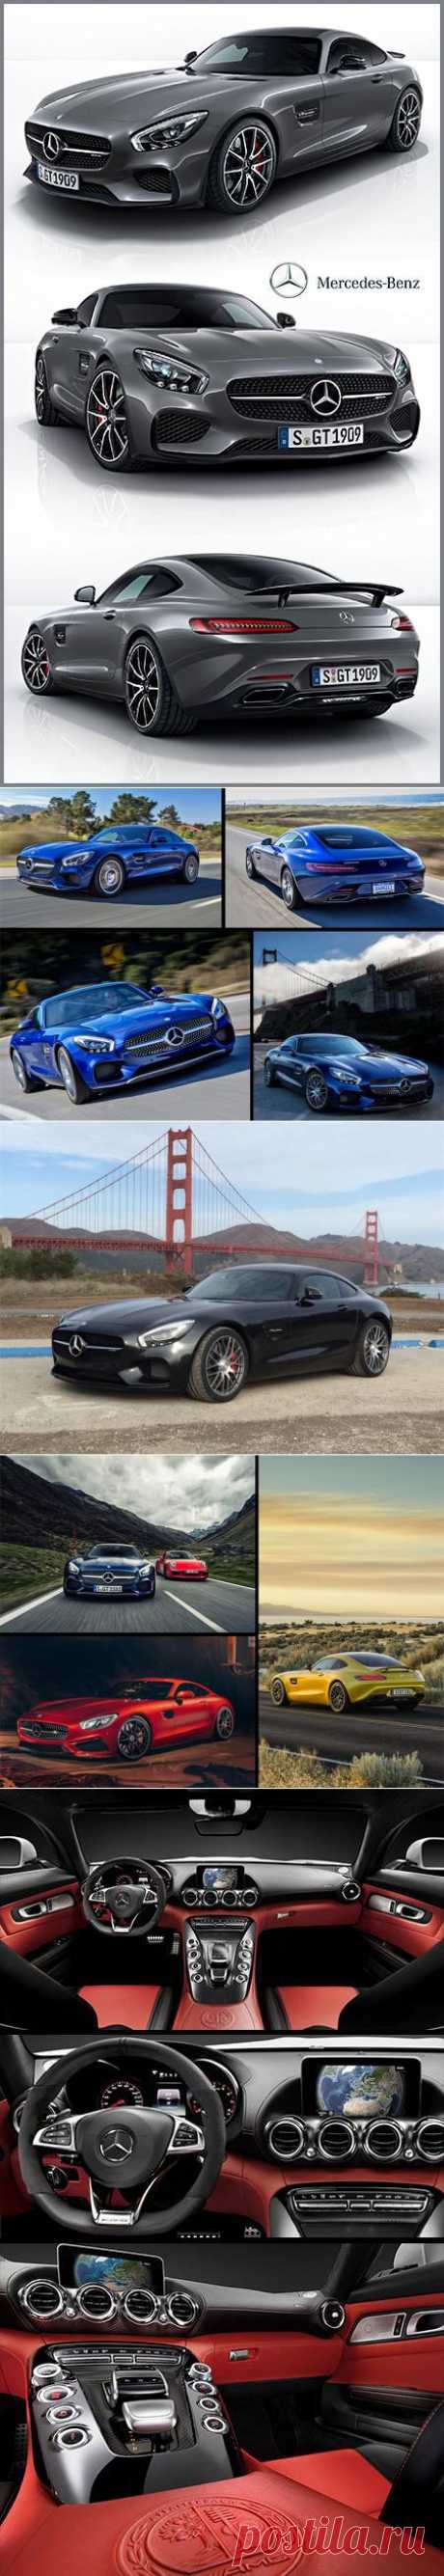 Mercedes-Benz объявила американские цены на Mercedes-AMG GT S 2016. — Воротила